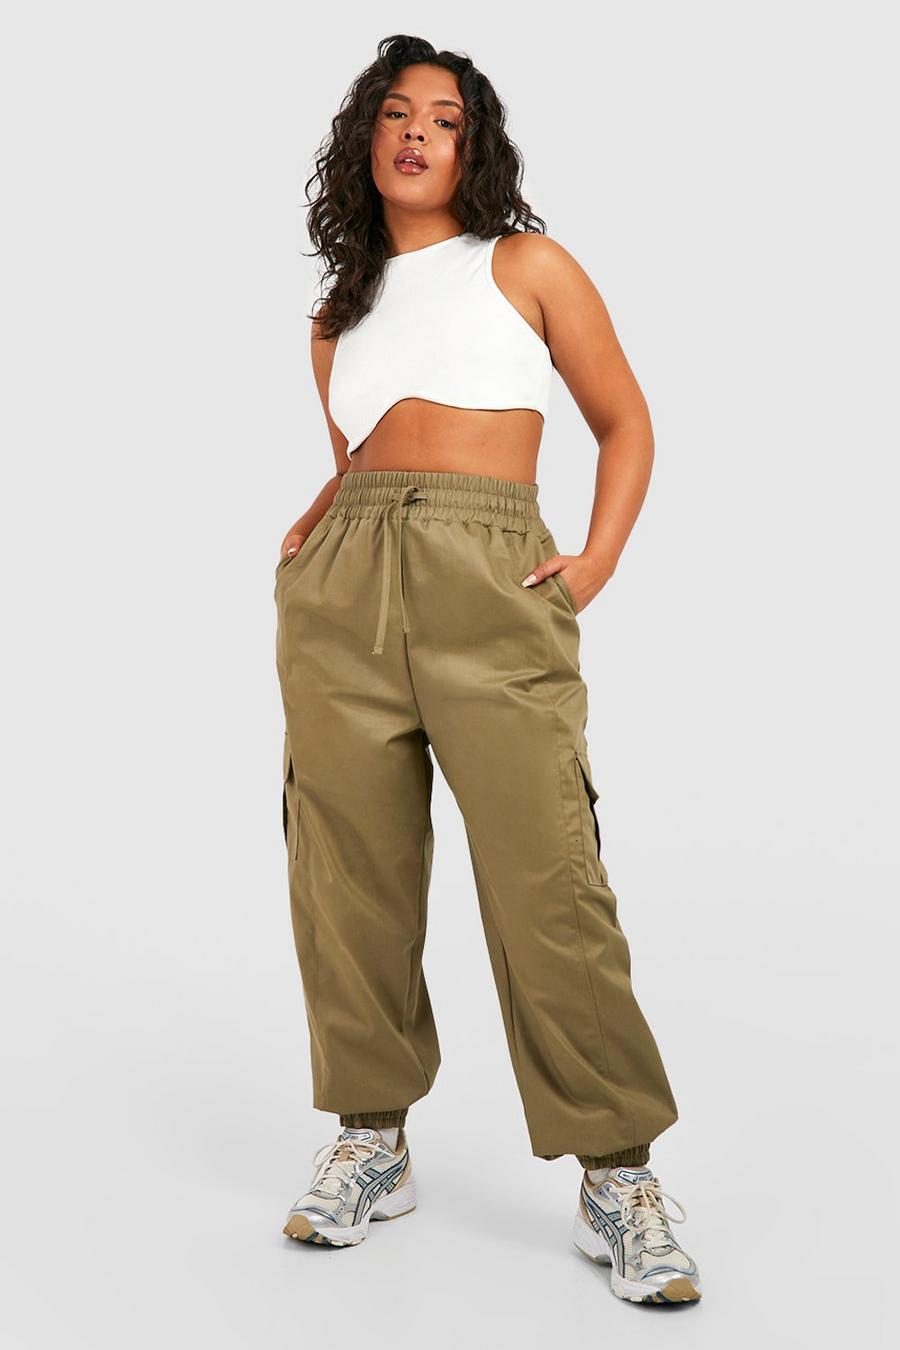 https://media.boohoo.com/i/boohoo/gzz44279_khaki_xl/female-khaki-plus-twill-elasticated-cuff-cargo-pants/?w=900&qlt=default&fmt.jp2.qlt=70&fmt=auto&sm=fit